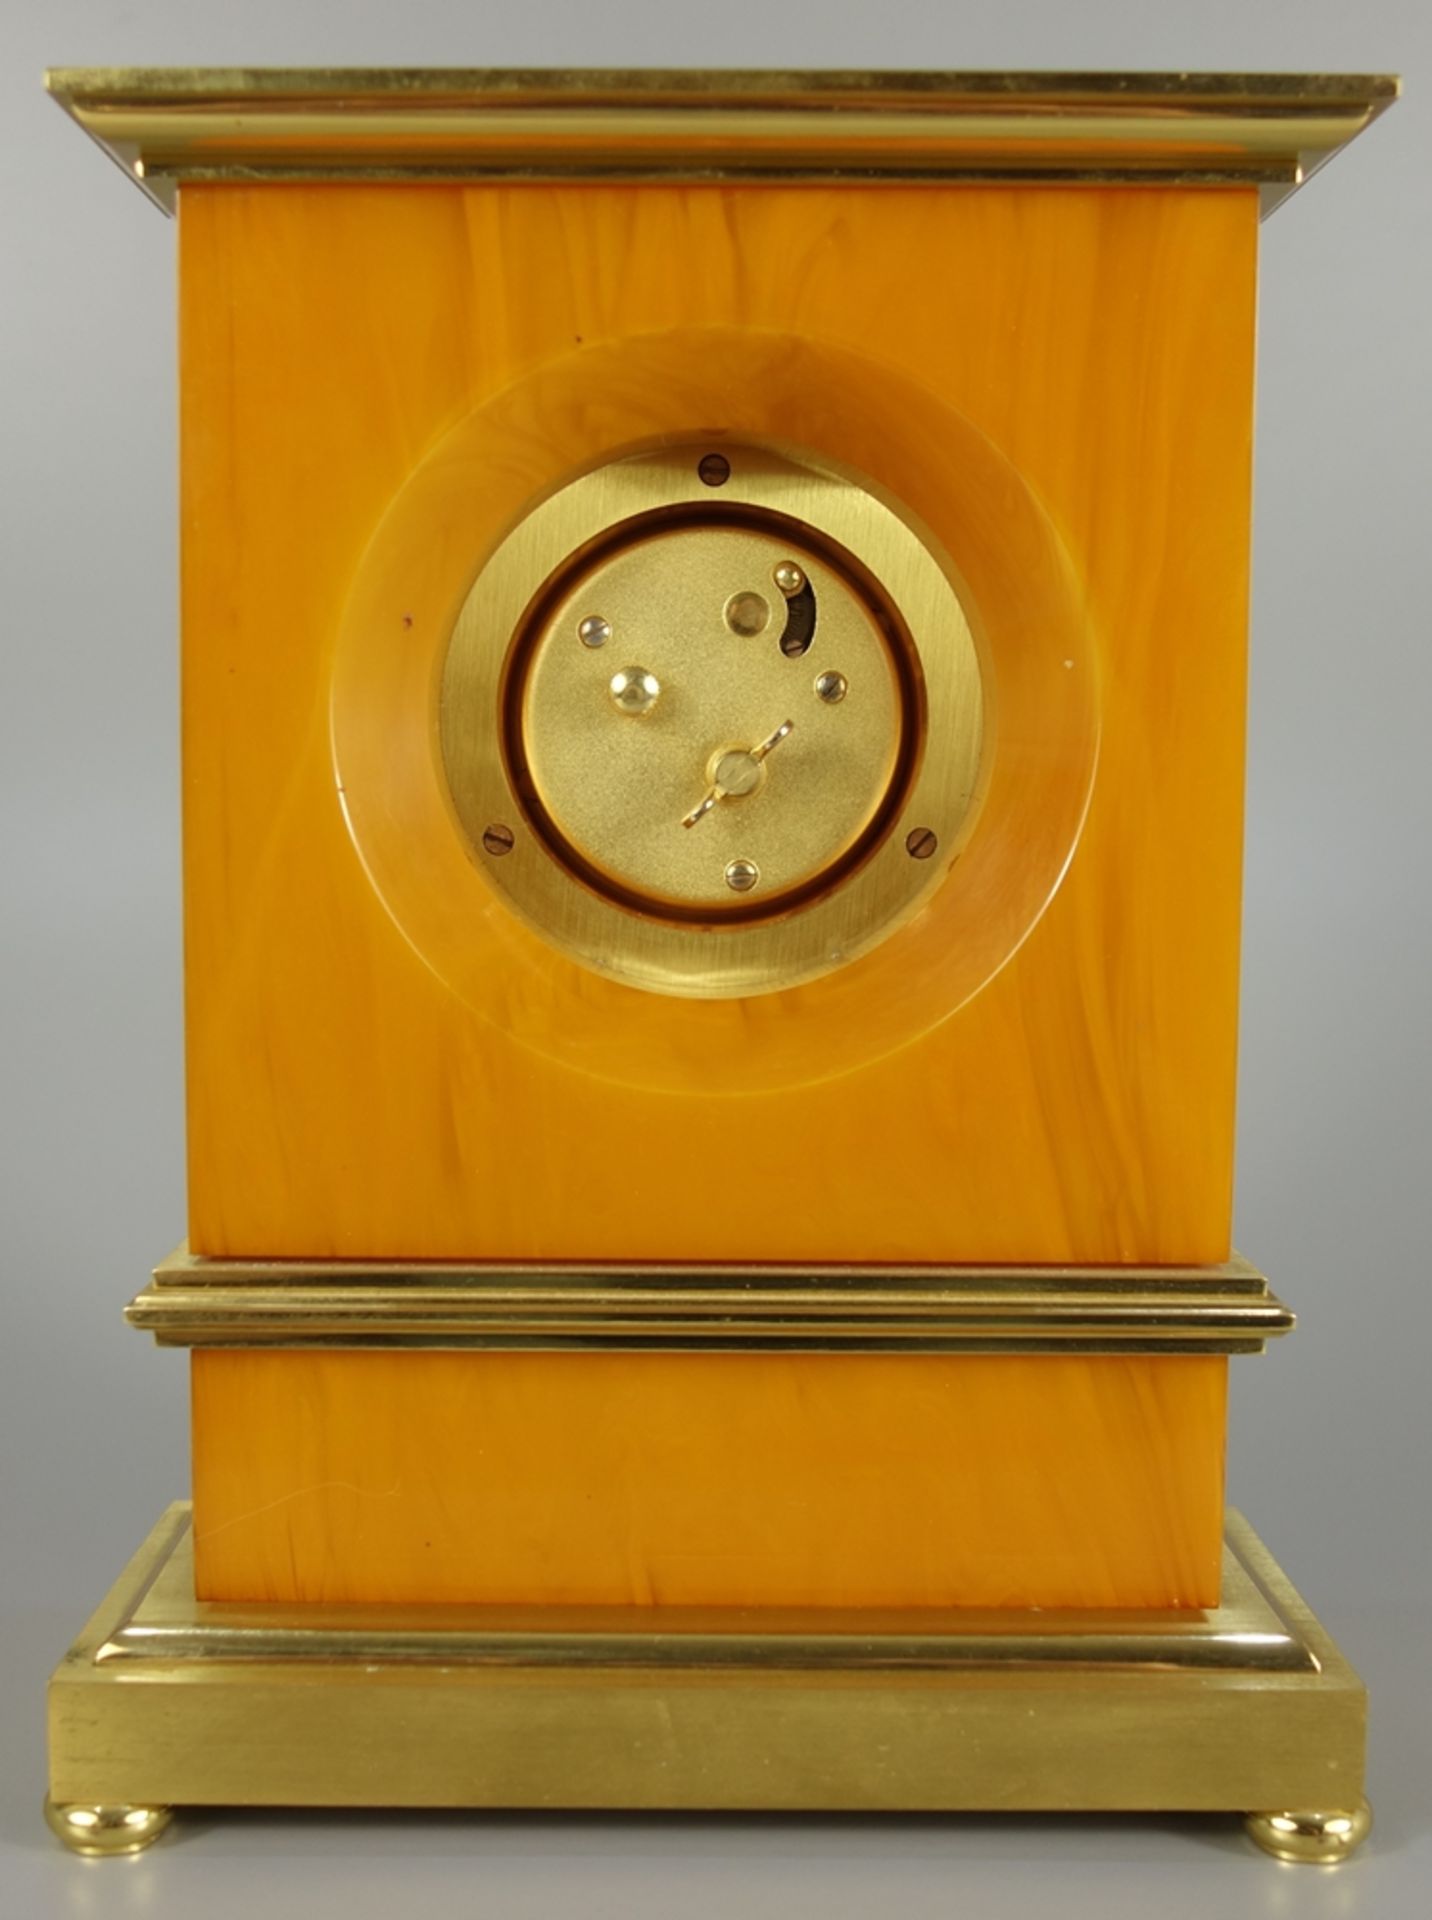 Tischuhr, Jaeger-LeCoultre, 8-Tage-Uhr im Empirestil, um 1968-70, Nr. 496, HBT:18,7*14,2*6,3cm, - Bild 4 aus 4